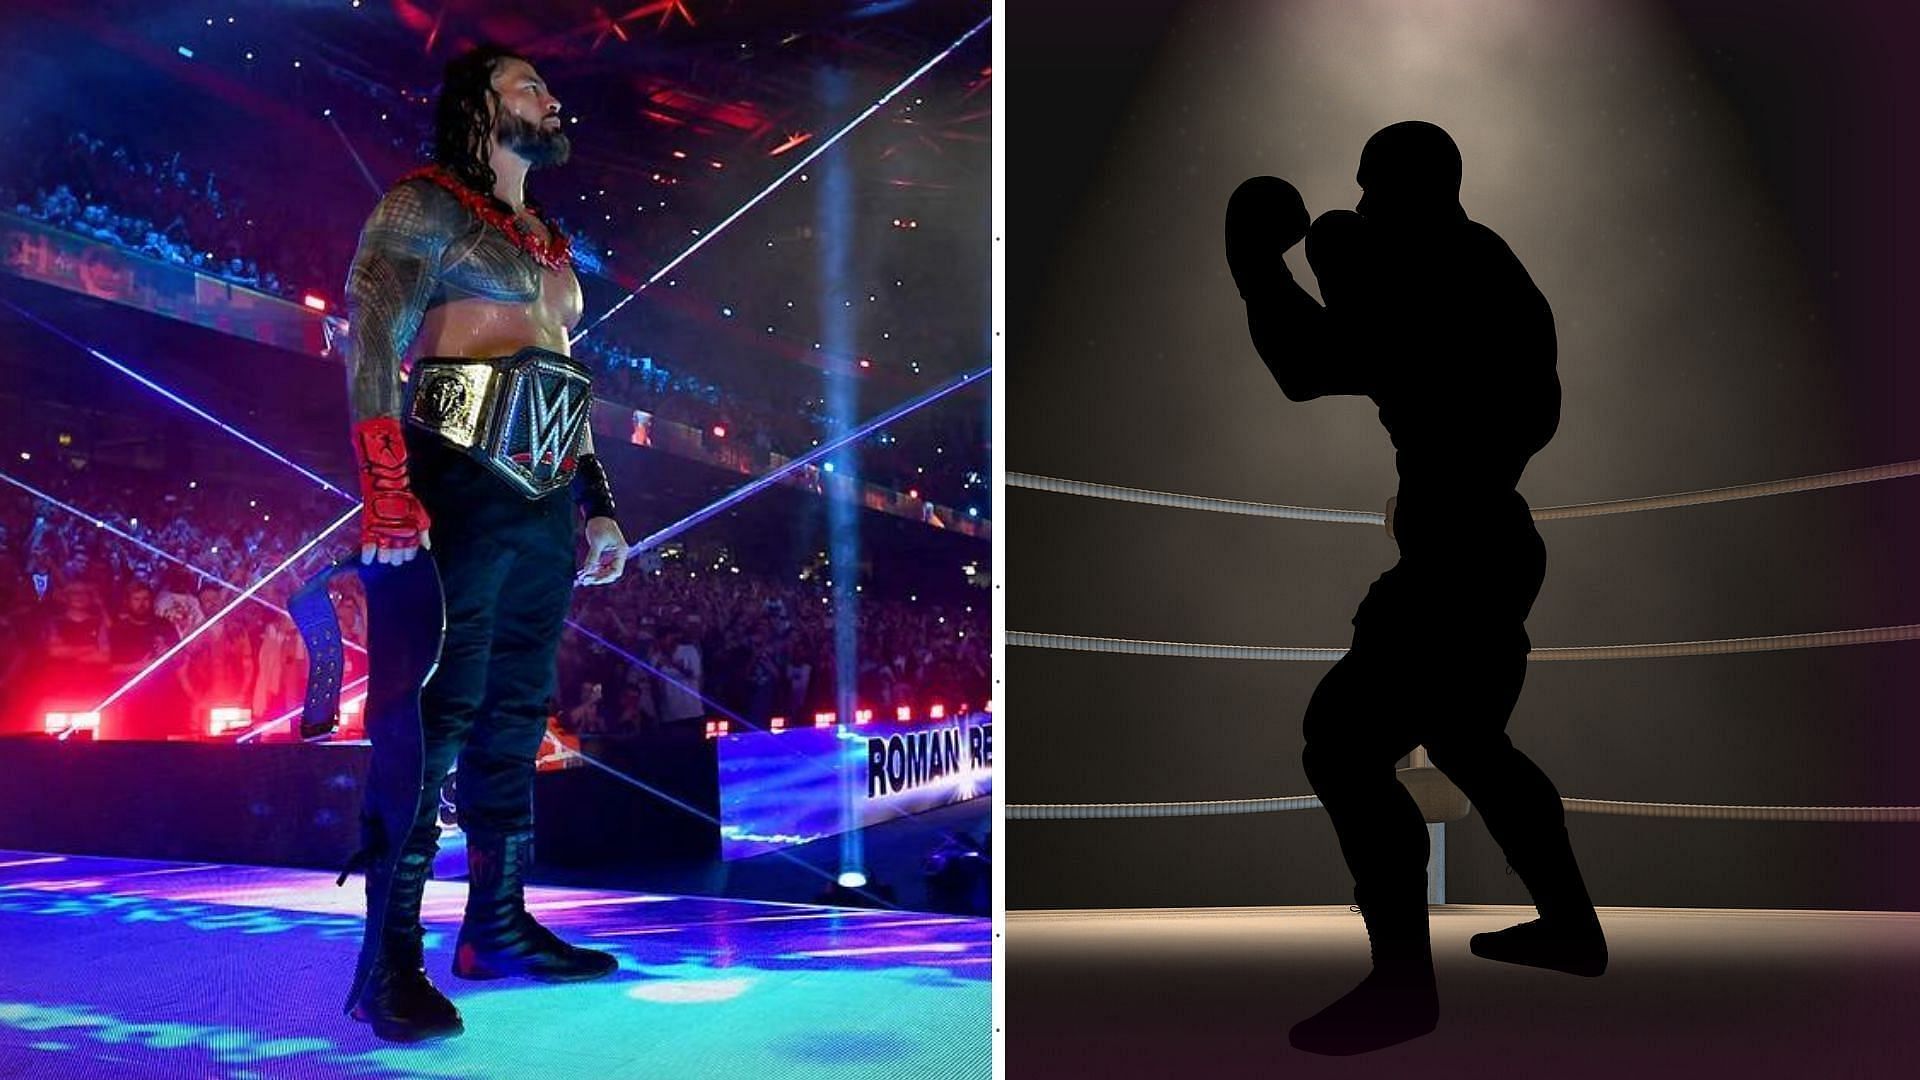 अनडिस्प्यूटेड  WWE यूनिवर्सल चैंपियन रोमन रेंस 